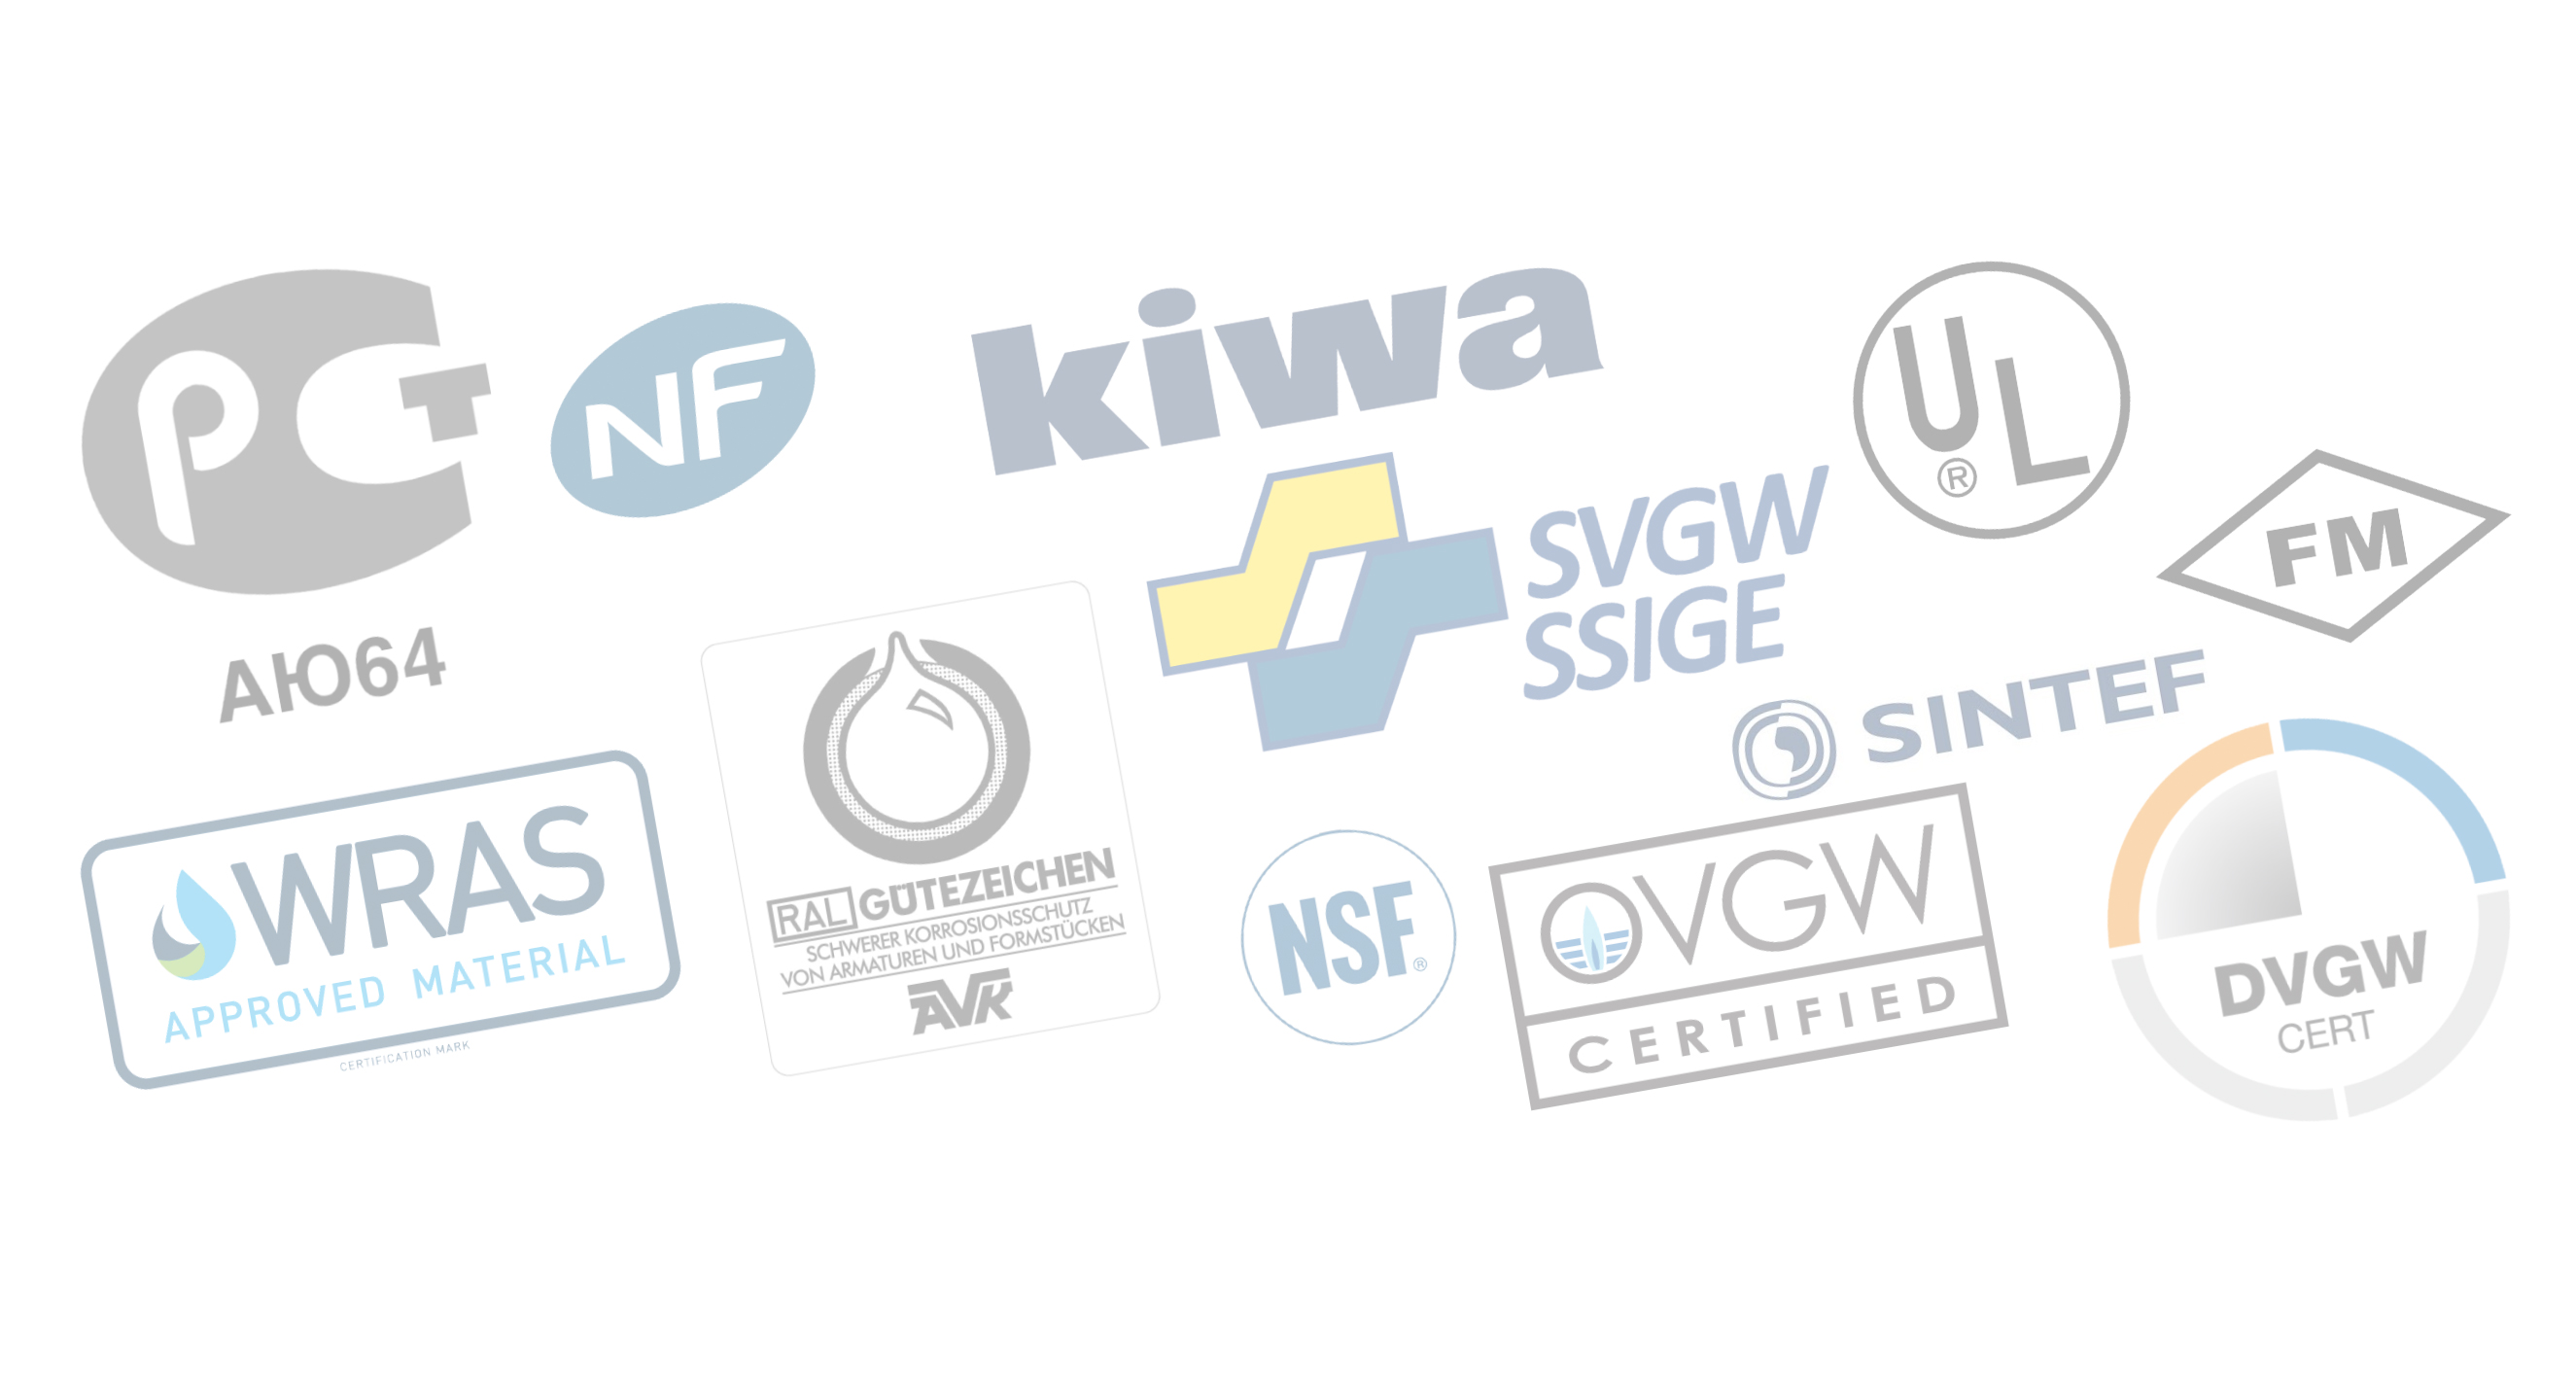 Logoer fra tredjepartsgodkendelser af AVK-produkter